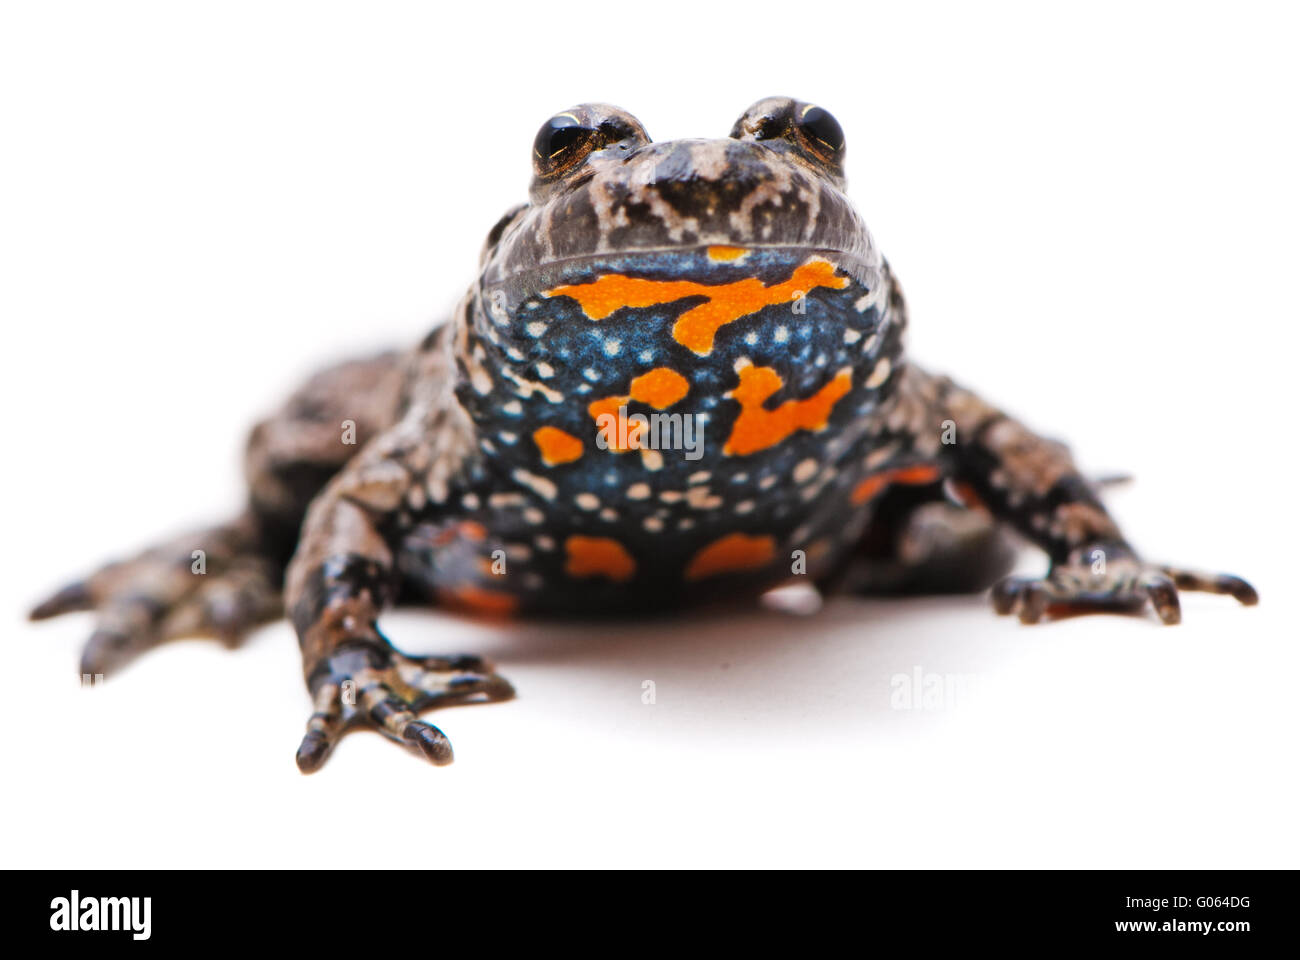 Bombina bombina. European Fire-bellied toad on white background. Stock Photo